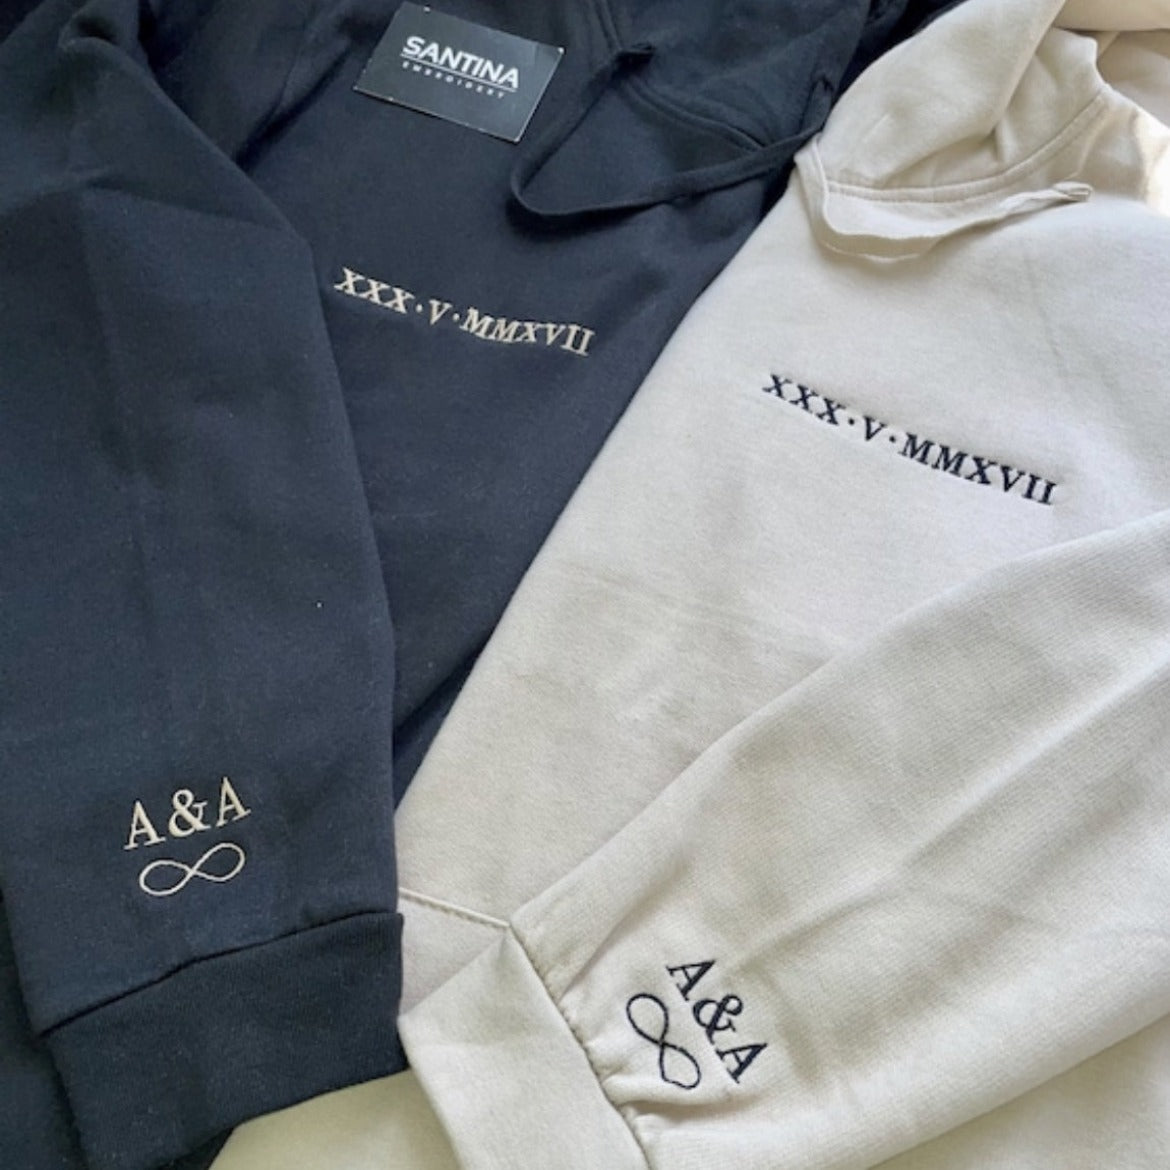 Custom Anniversary sport style sweatshirt hoodie or T-Shirt – Santina  Embroidery